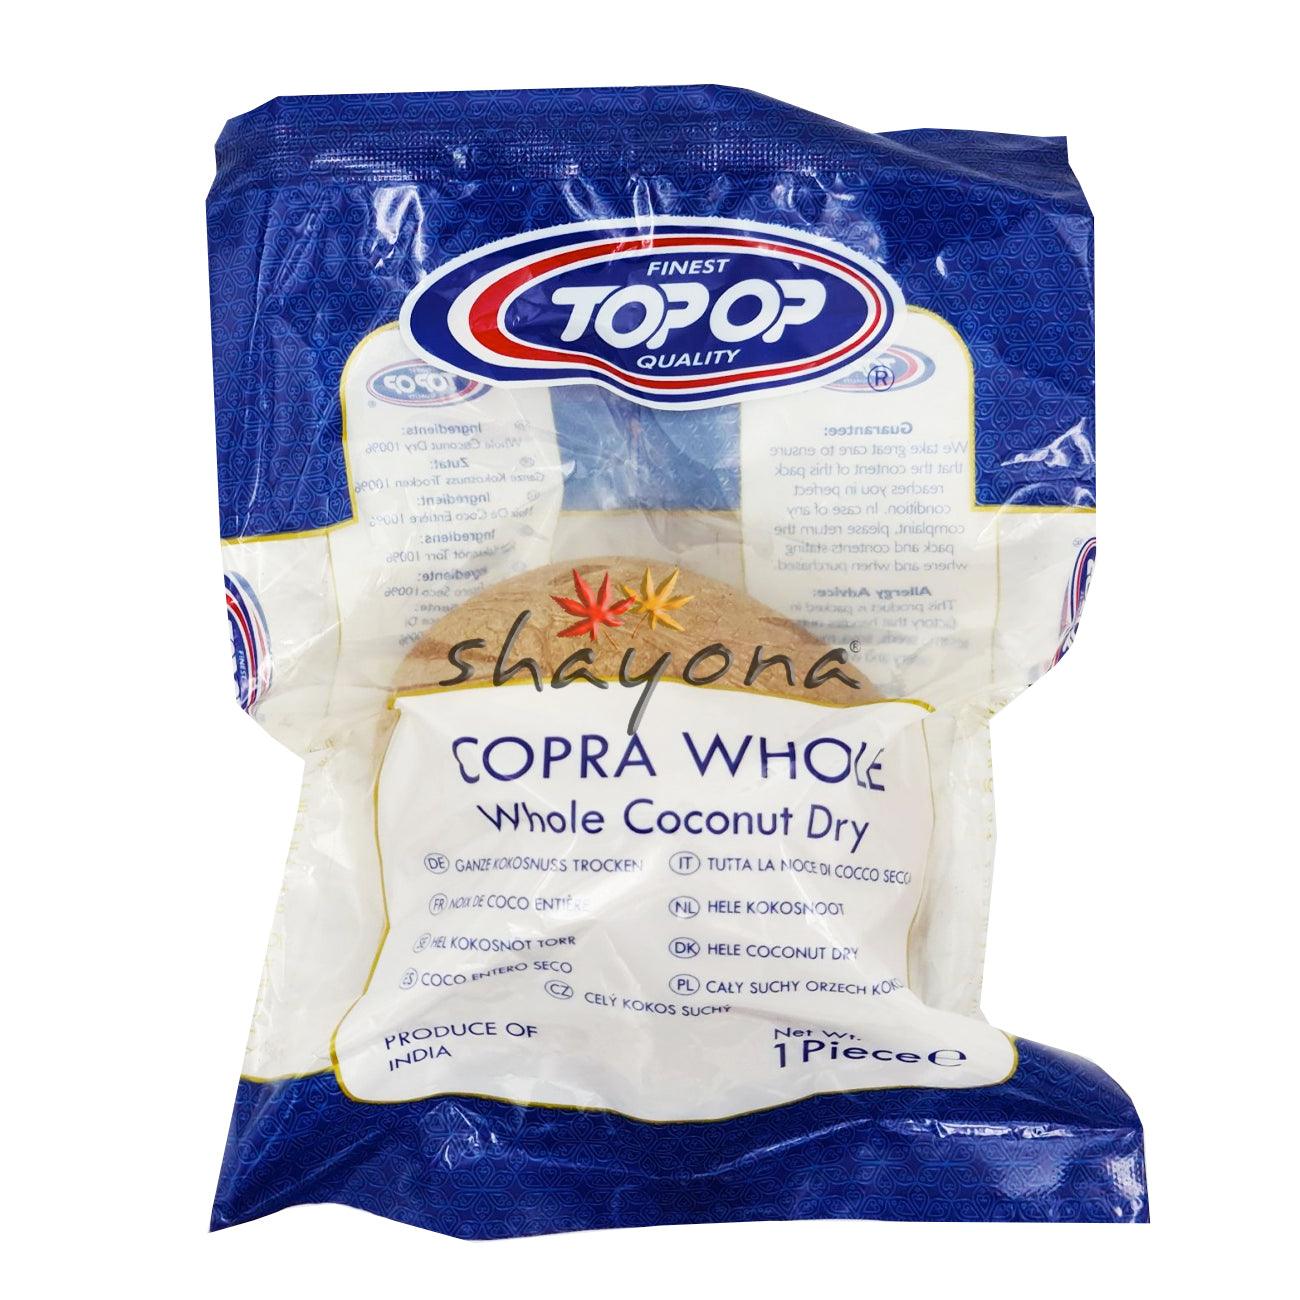 TopOp Copra Whole Dry - Shayona UK